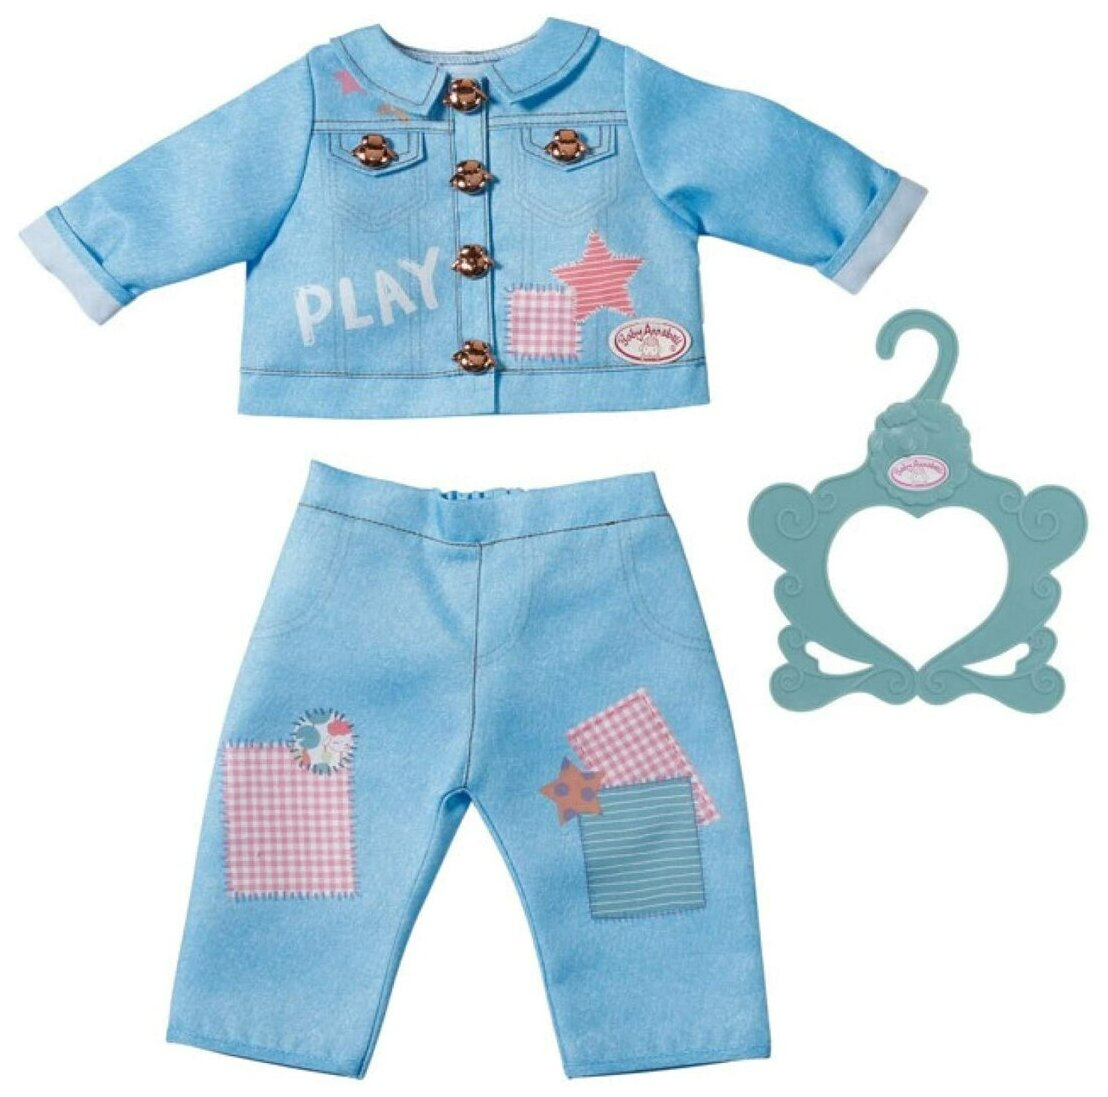 Одежда для куклы Baby Annabell Zapf Creation Одежда для мальчика, 43 см, 703-069 shantou одежда для куклы 45 см боди и шапочка yale baby синяя blc59